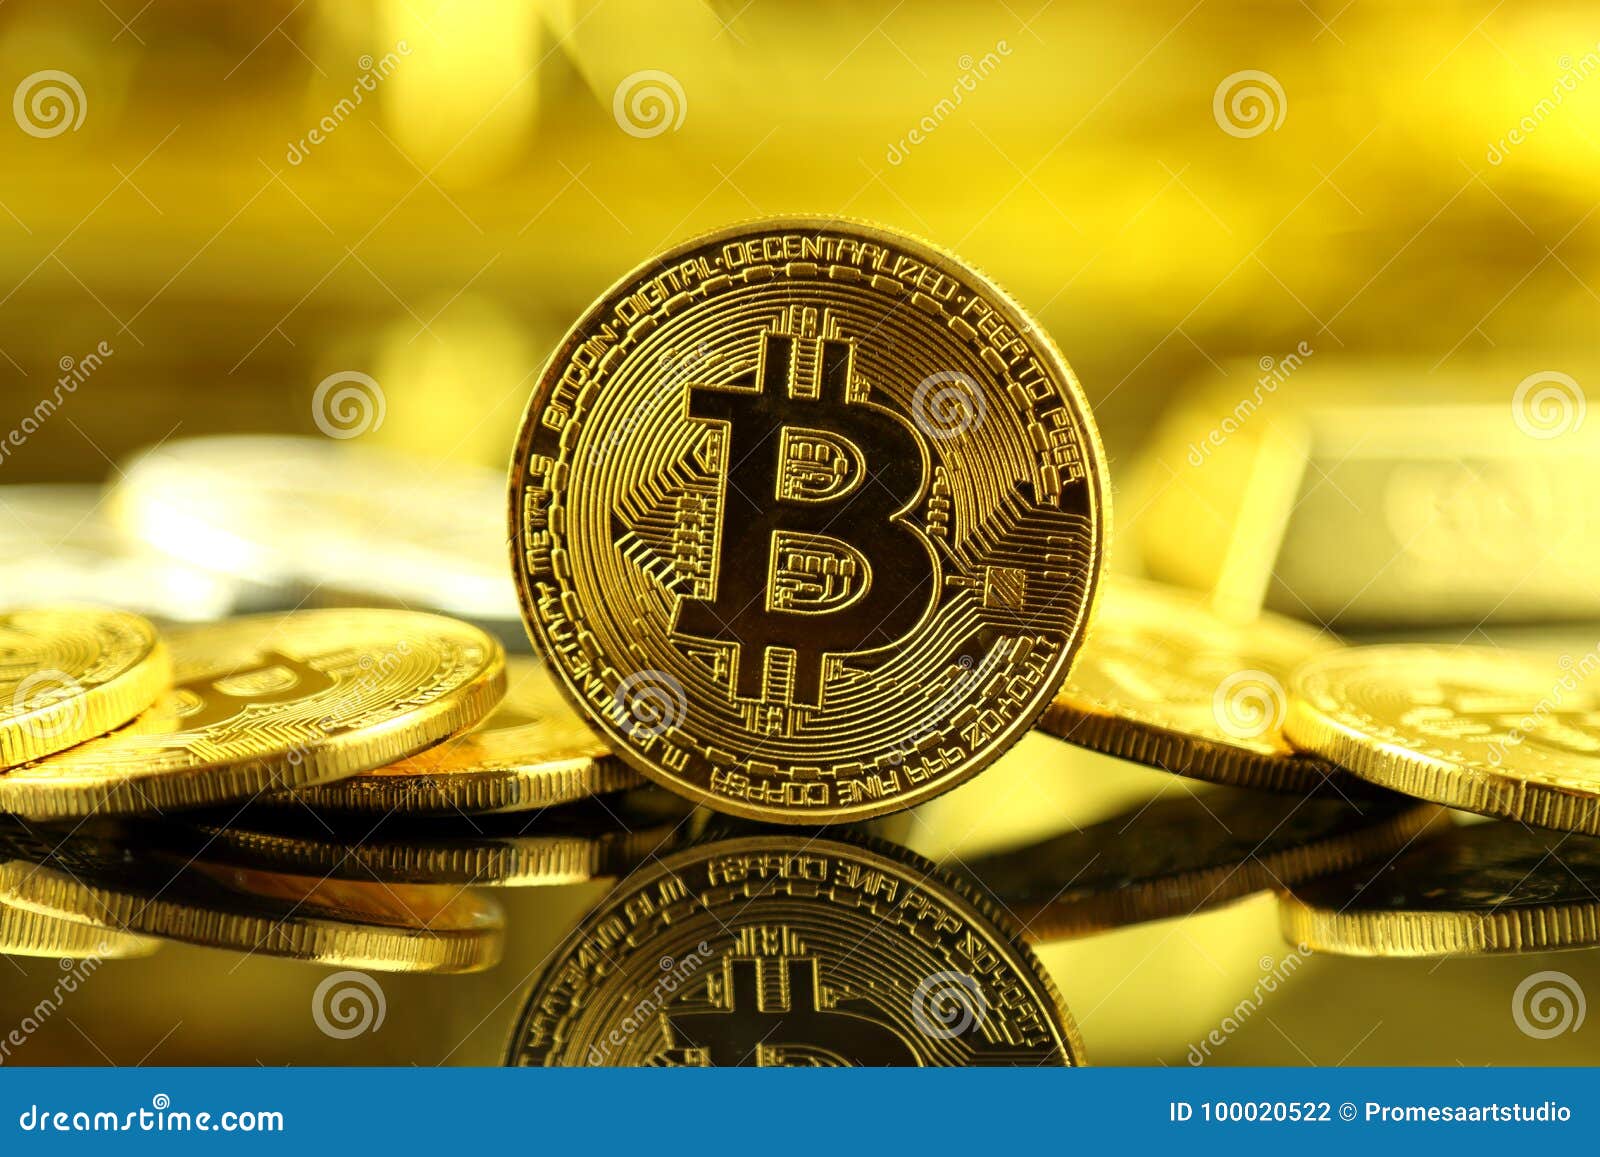 Physical Version Of Bitcoin, New Virtual Money. Stock ...